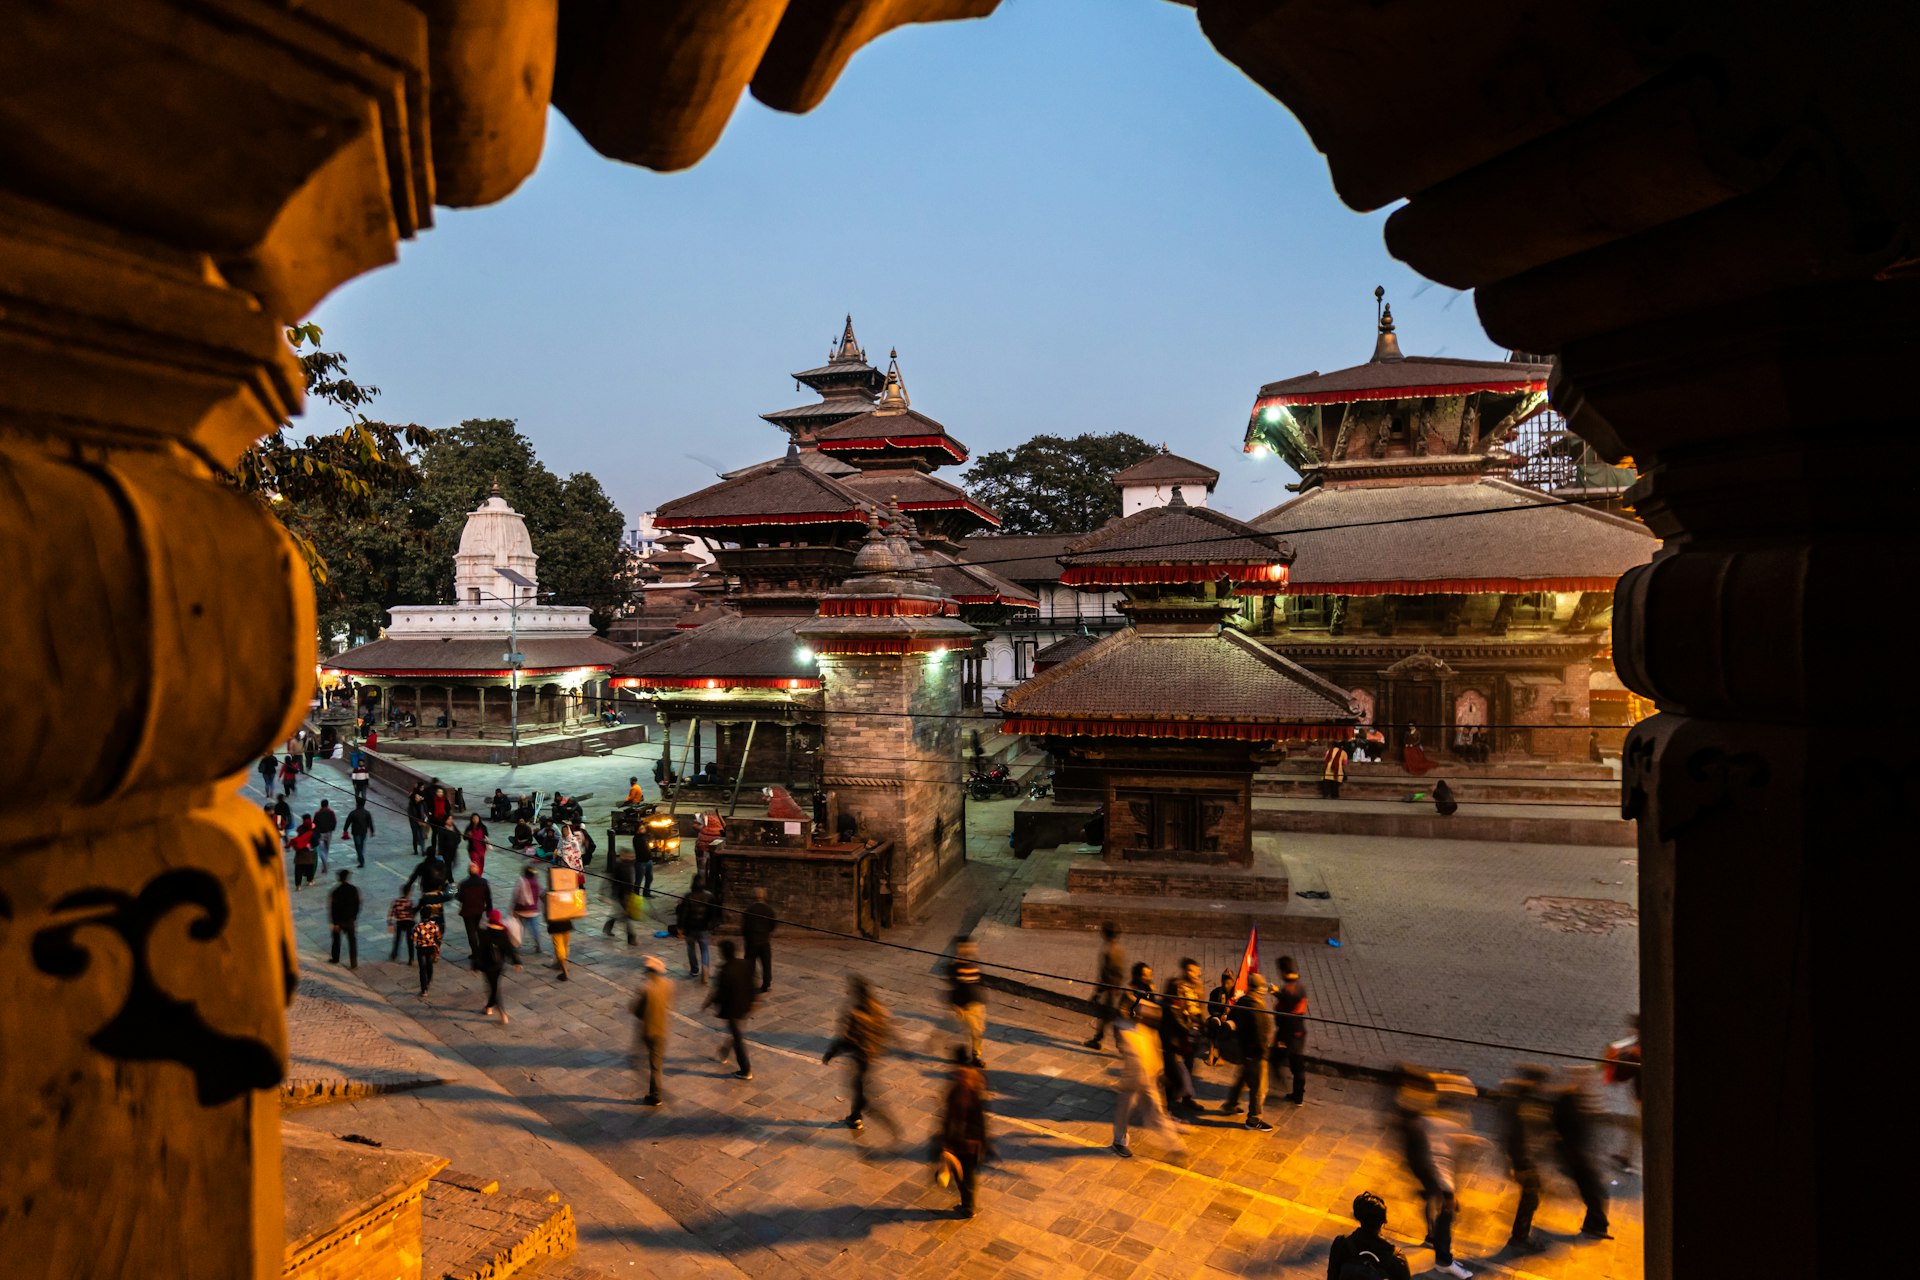 People move through Durbar Square in Kathmandu, Nepal